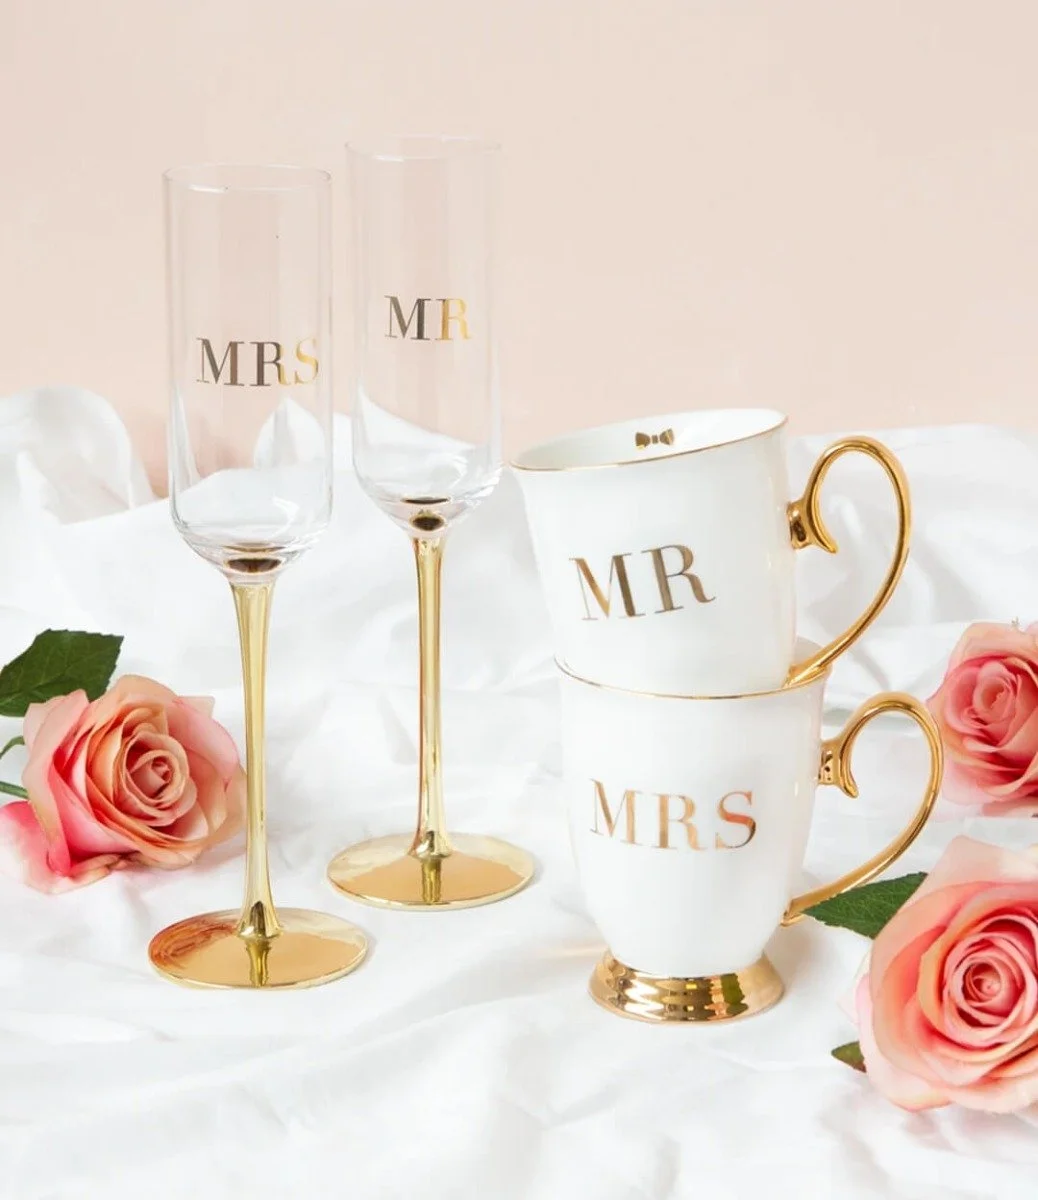 Mr & Mrs Mug Set - Set of 2 By Cristina Re